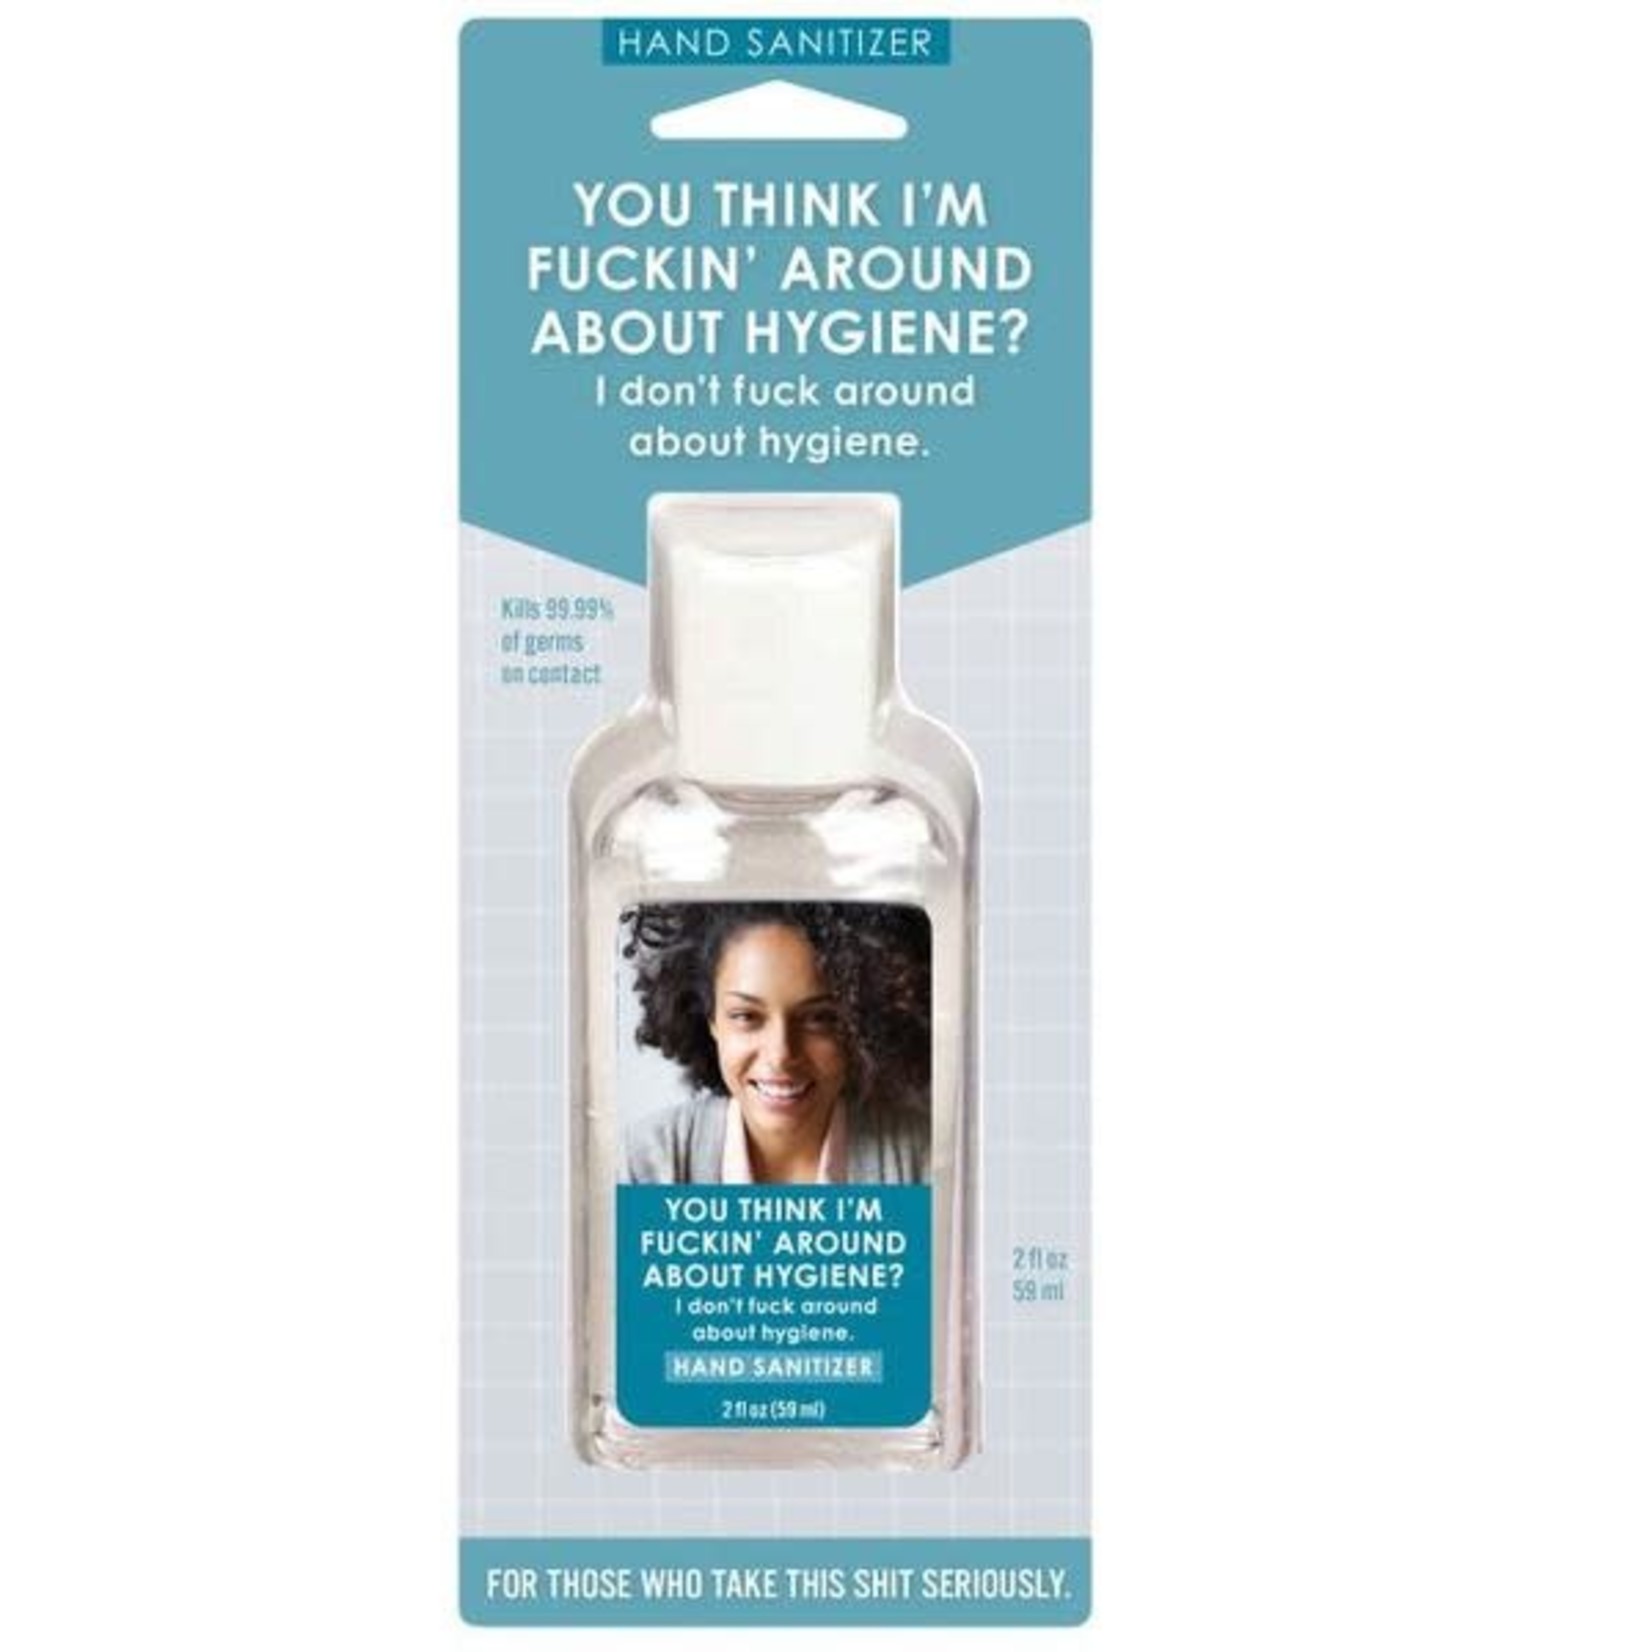 Sanitizer - You Think I'm Fuckin' Around About Hygiene?